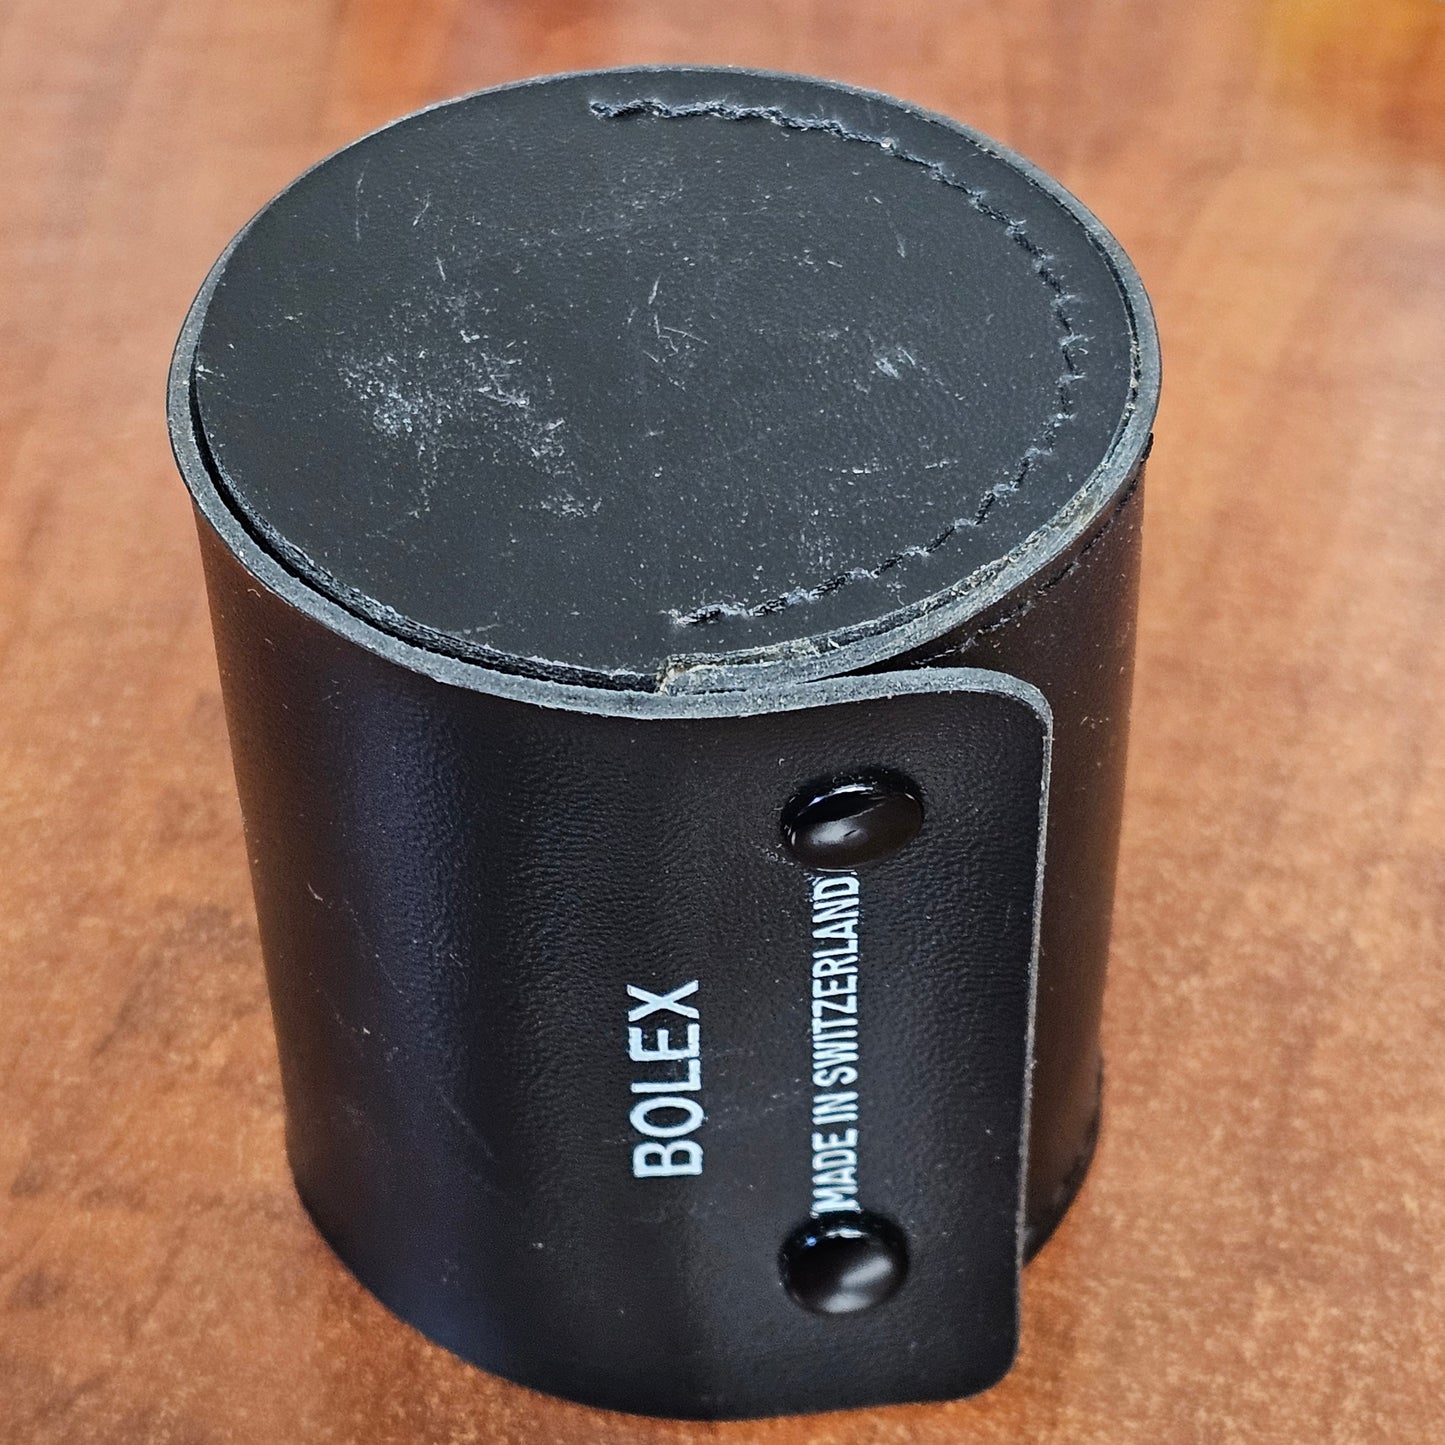 Original Leather Lens Case for Switar Preset 10mm or 26mm by Bolex